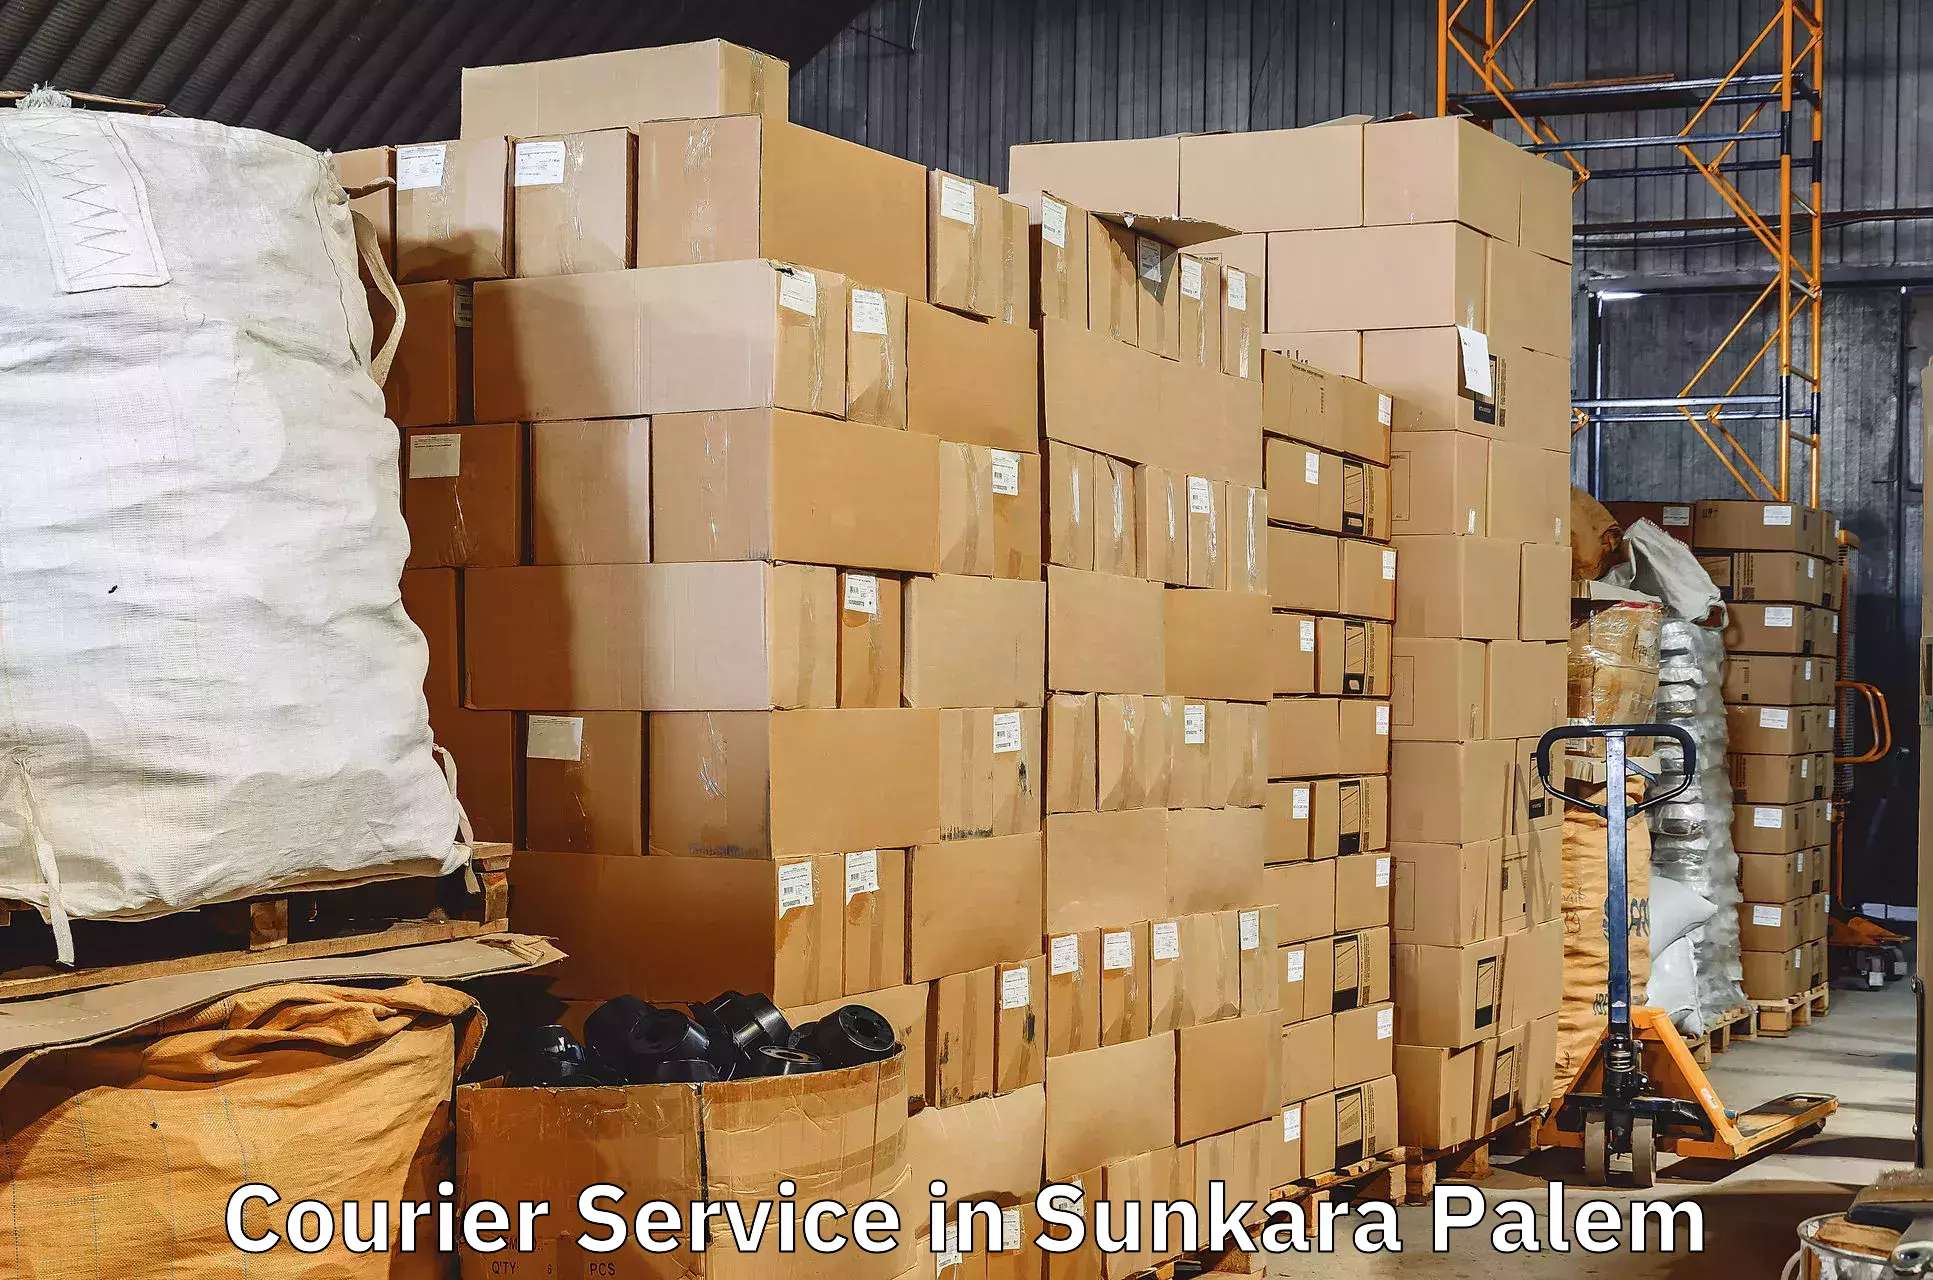 Express courier capabilities in Sunkara Palem